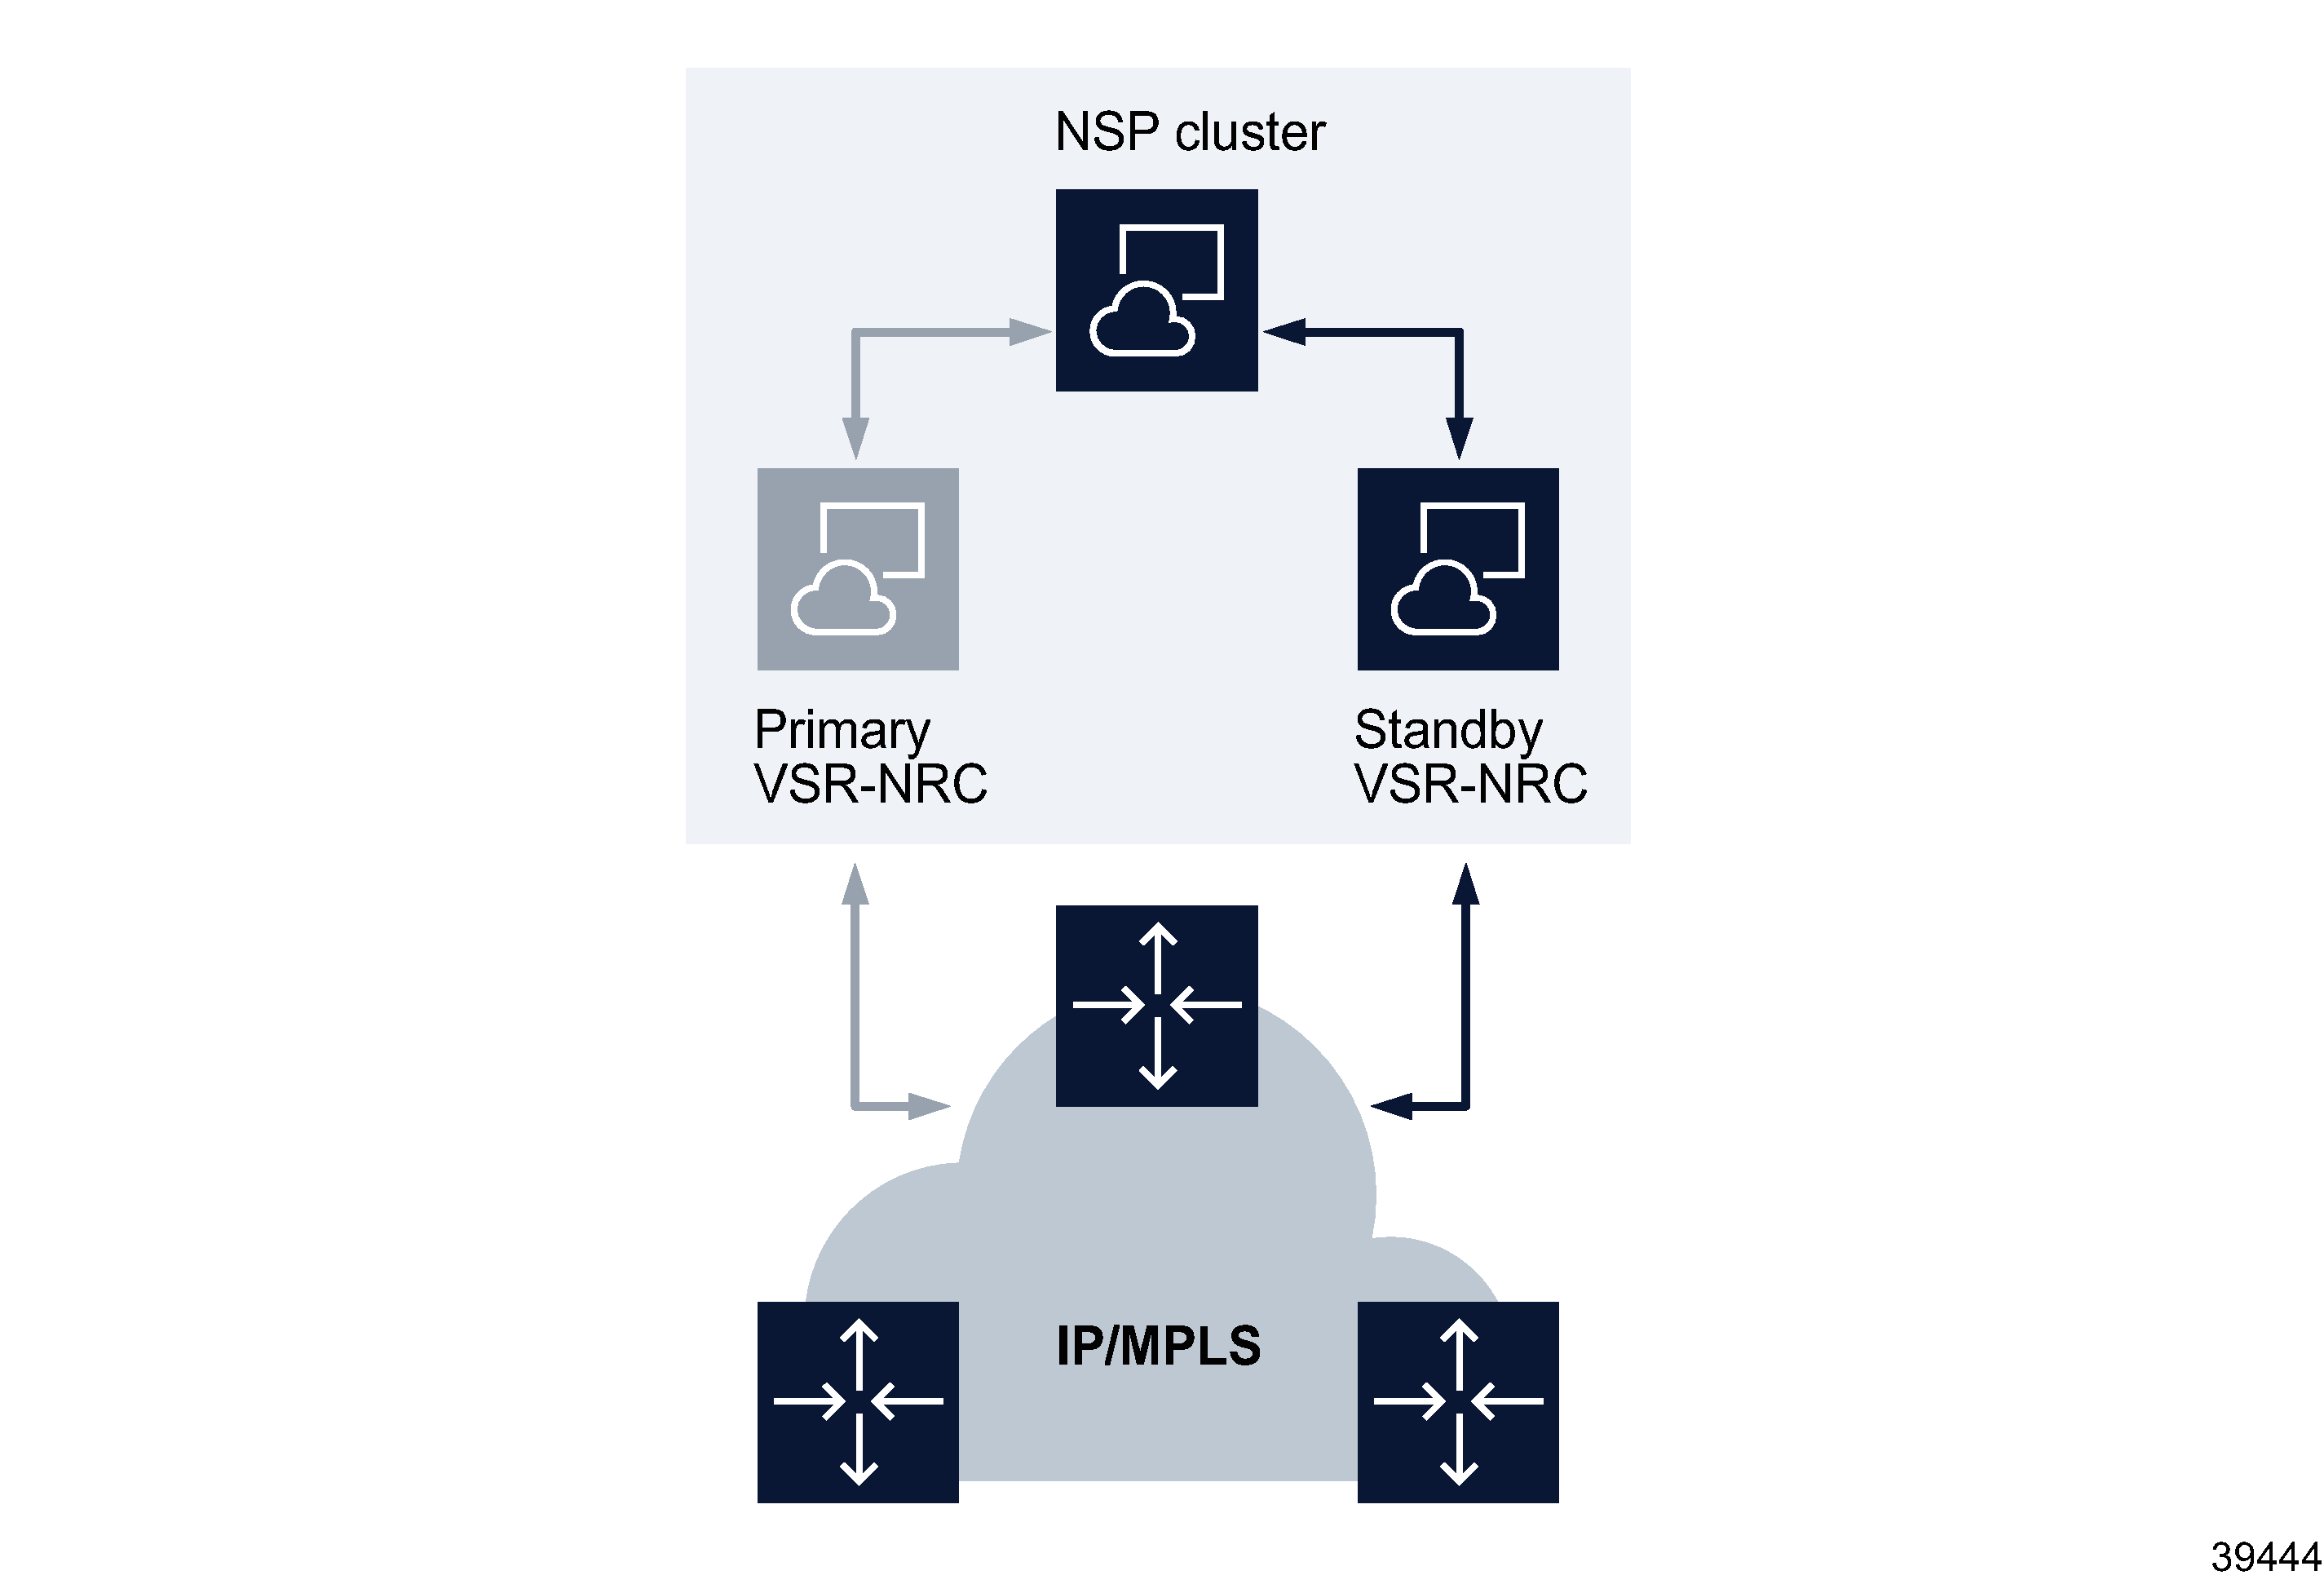 Primary VSR-NRC failure in single-site deployment